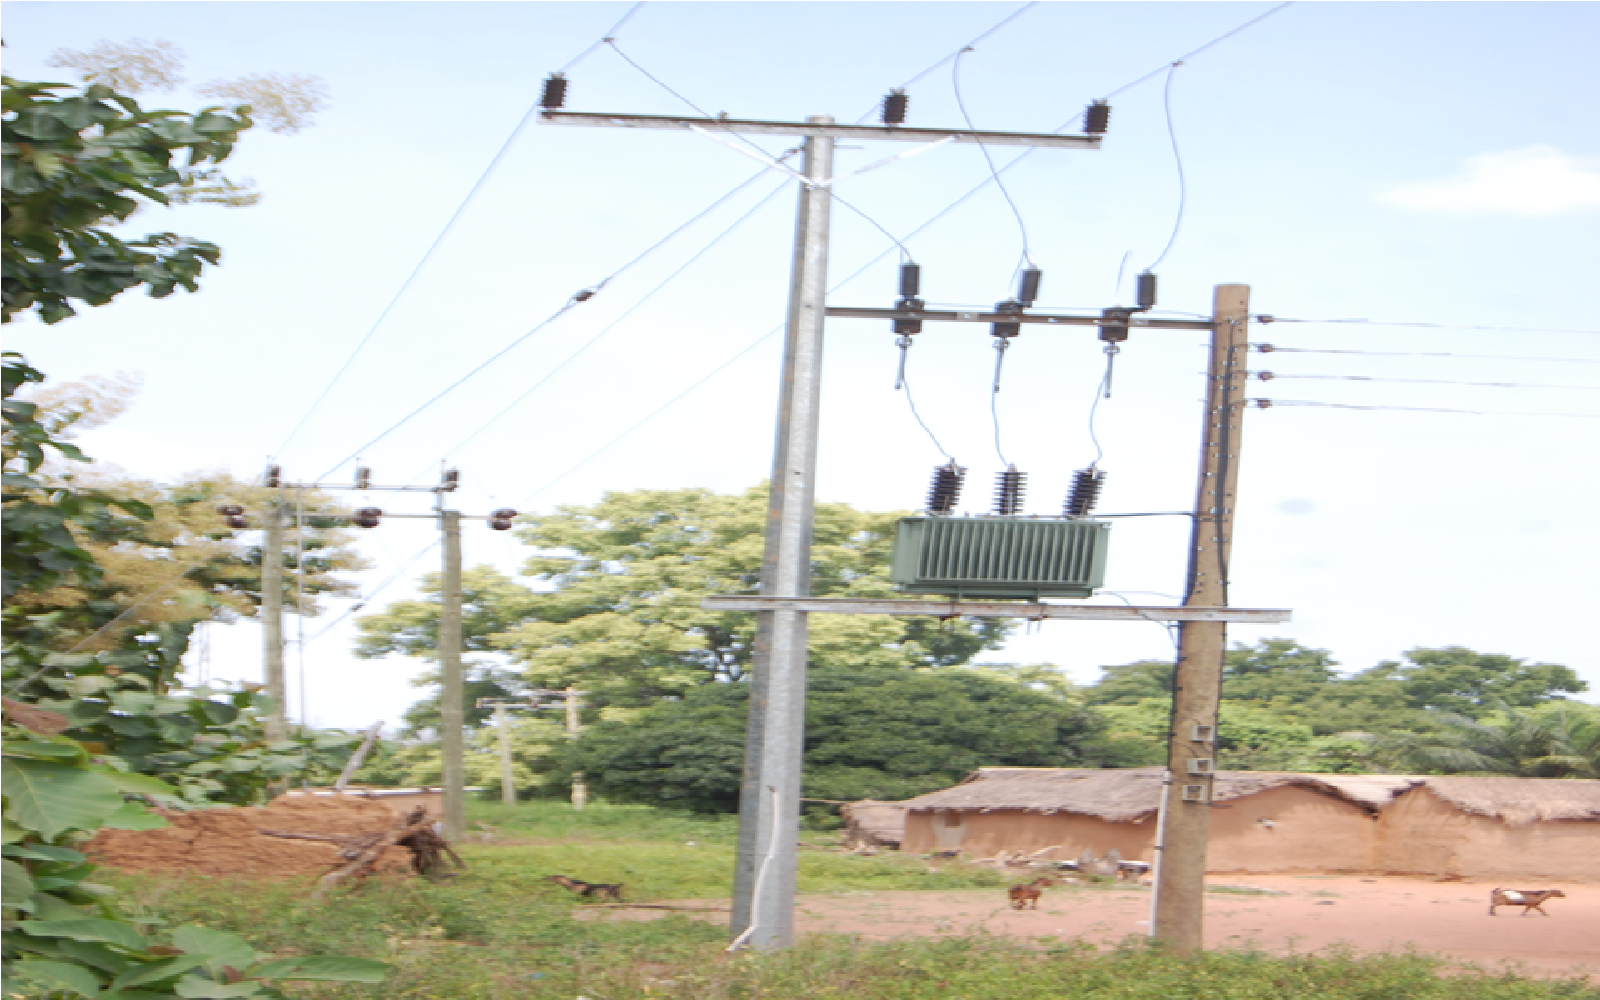 EXTENTION OF ELECTRICITY TO ADOMAN-KONKOMBA COMMUNITY